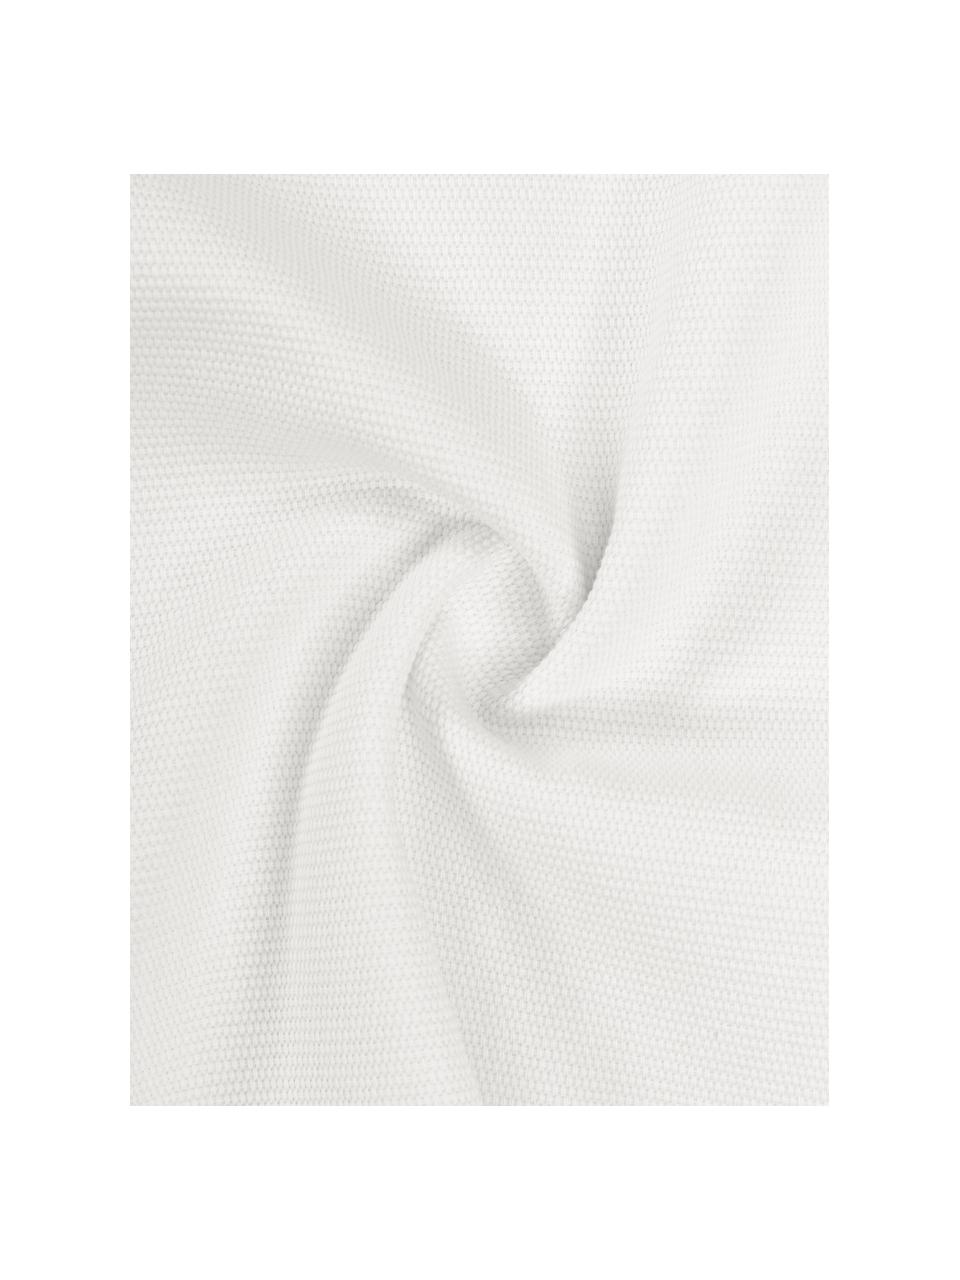 Federa arredo in cotone bianco crema Mads, 100% cotone, Beige, Larg. 30 x Lung. 50 cm